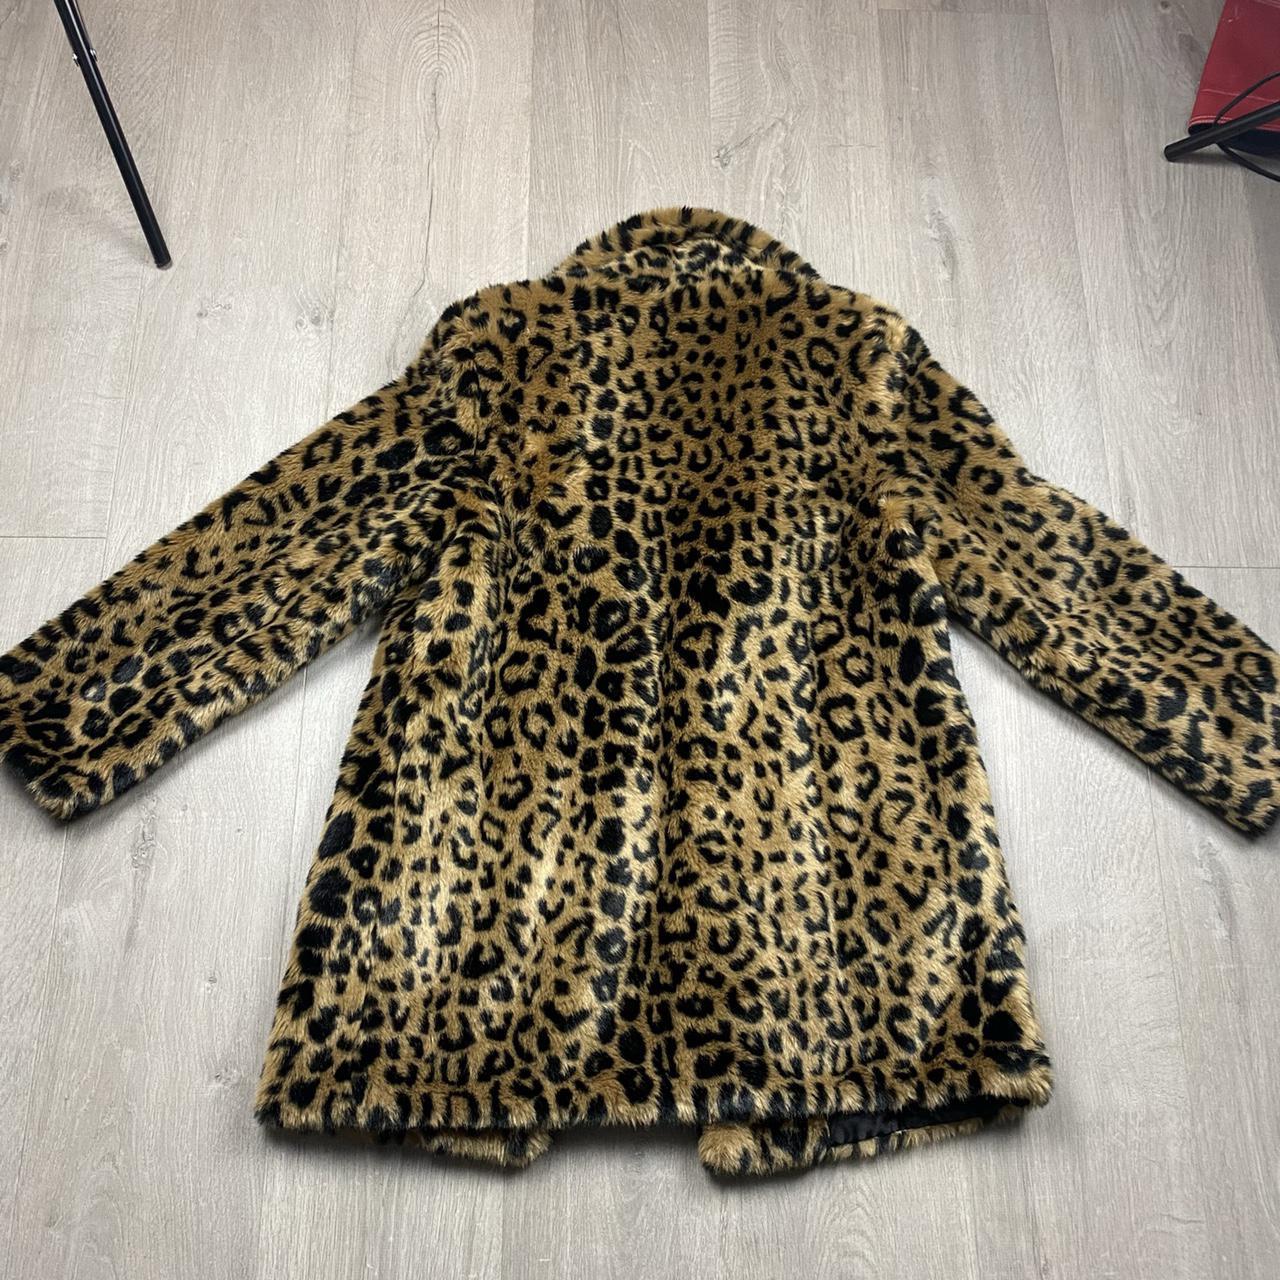 Vintage 2000s Pimkie leopard print fuzzy fur... - Depop